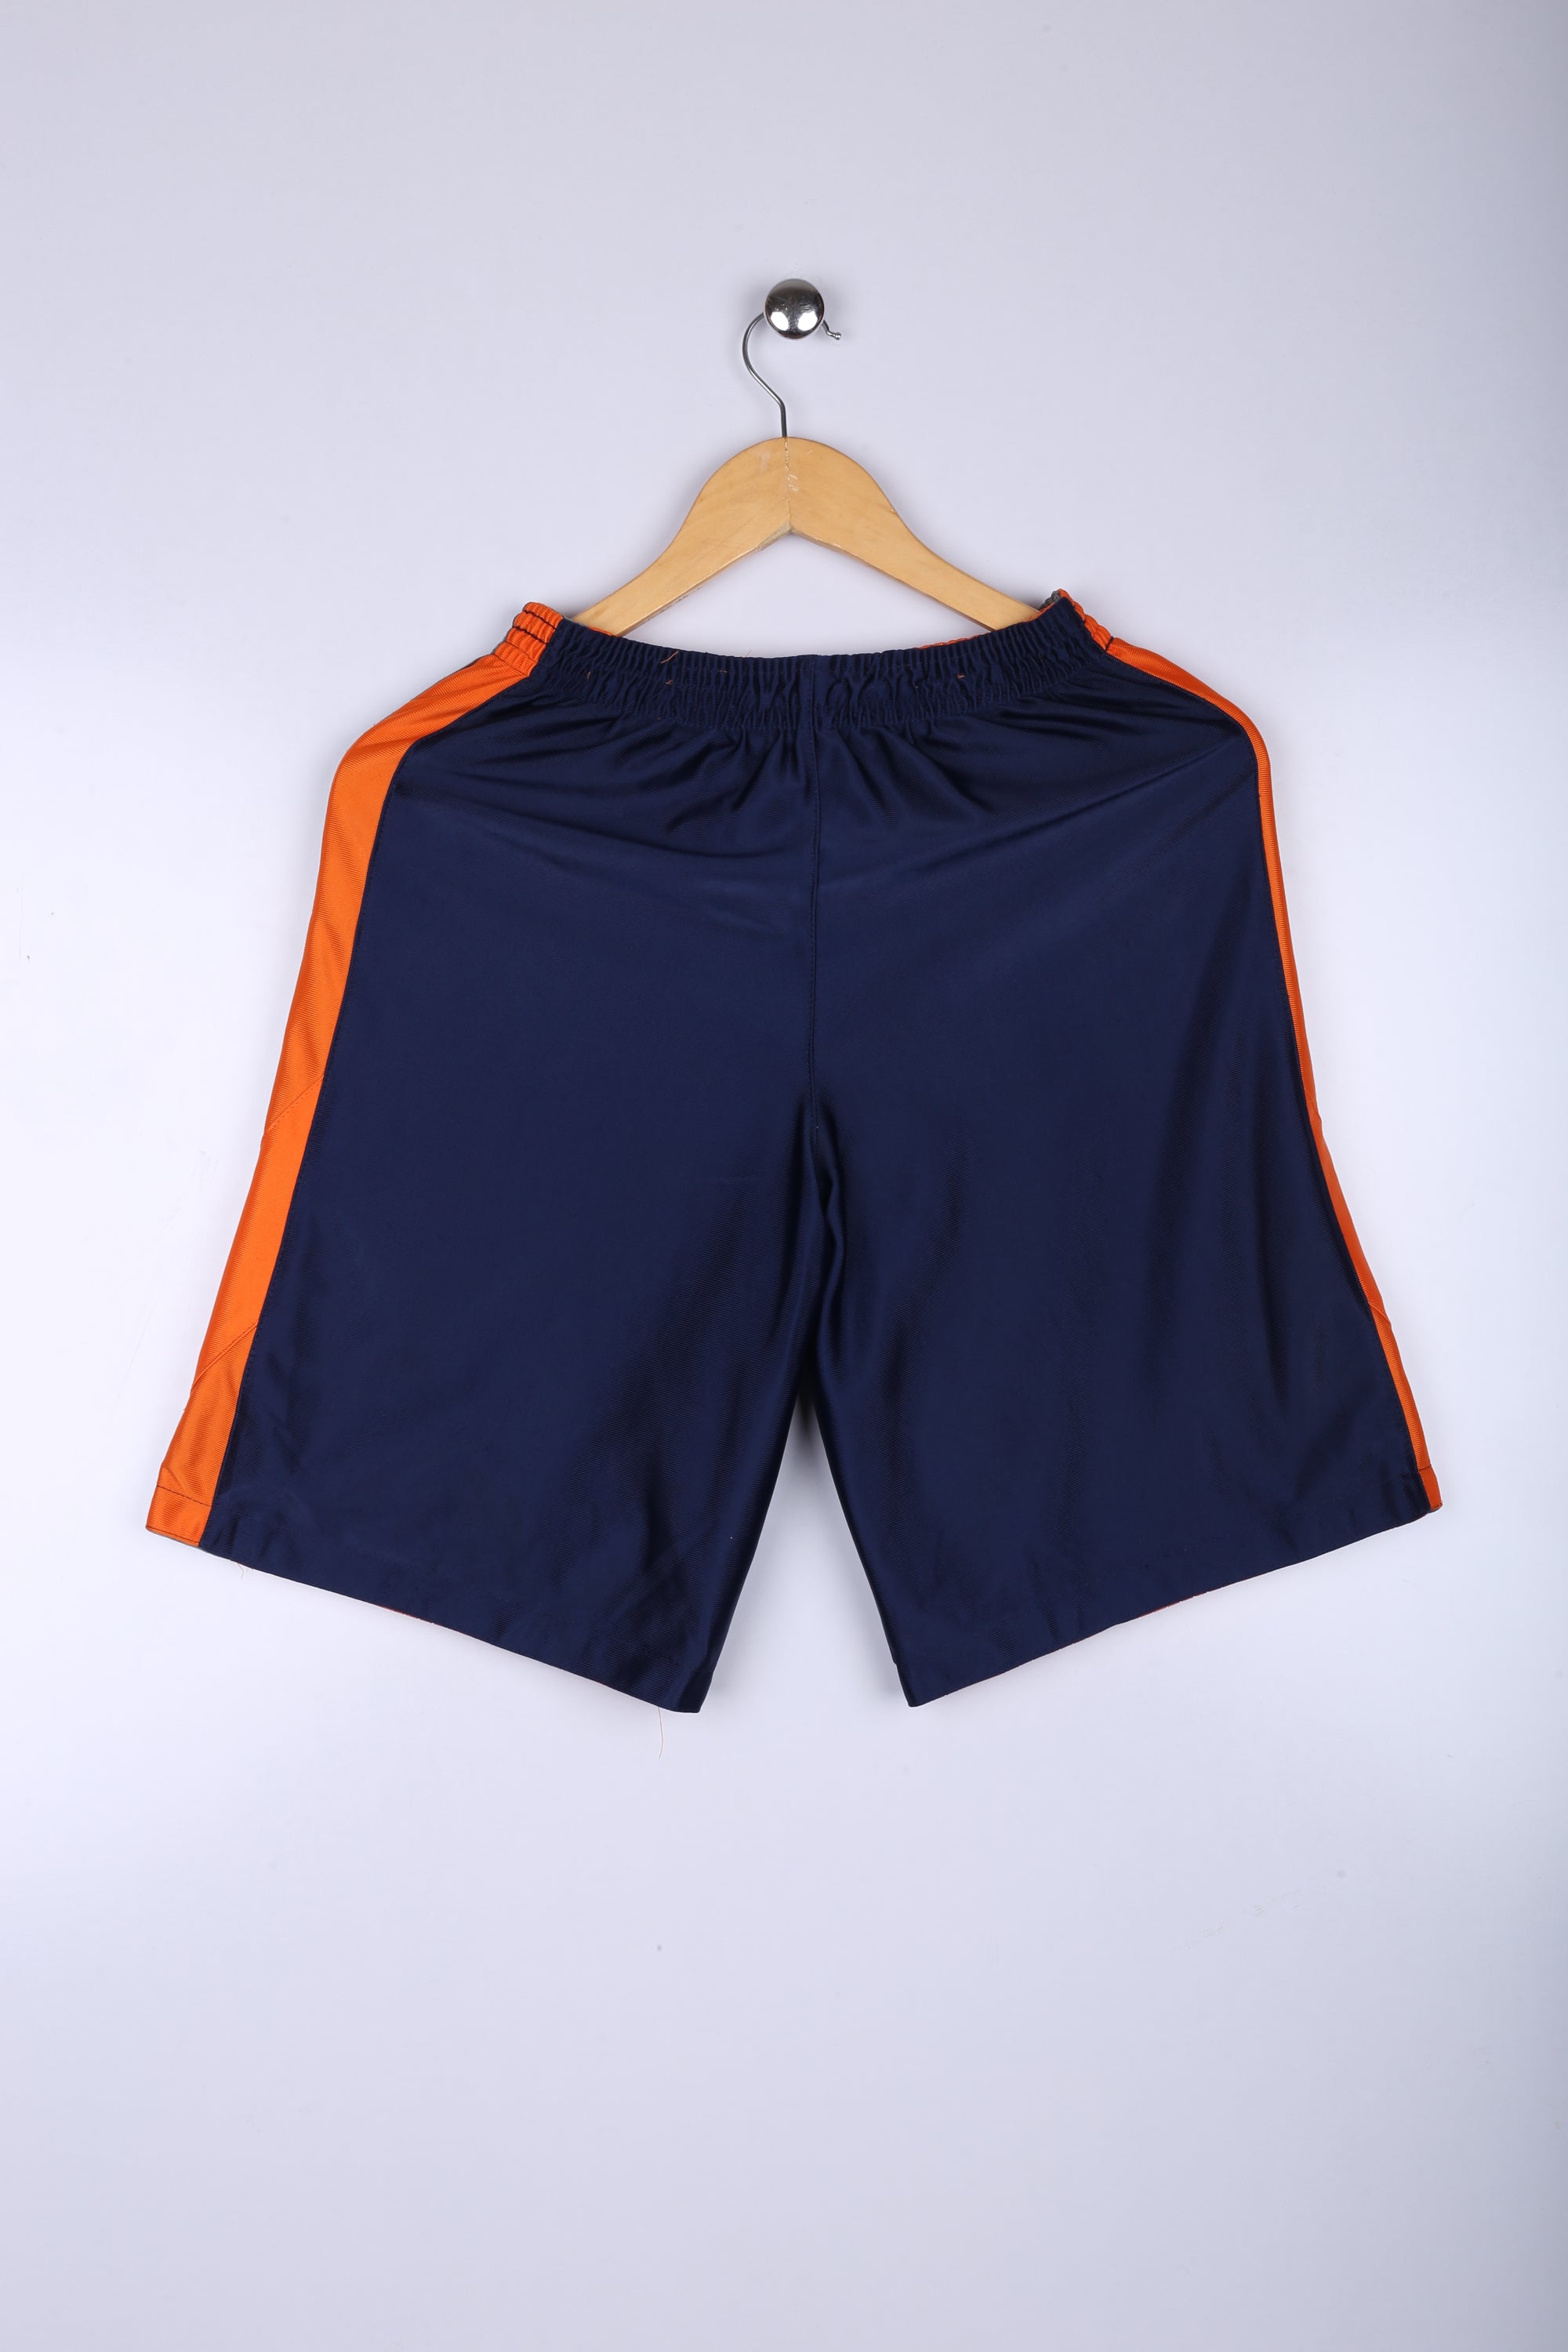 Vintage 90's Starter Shorts Navy/Orange